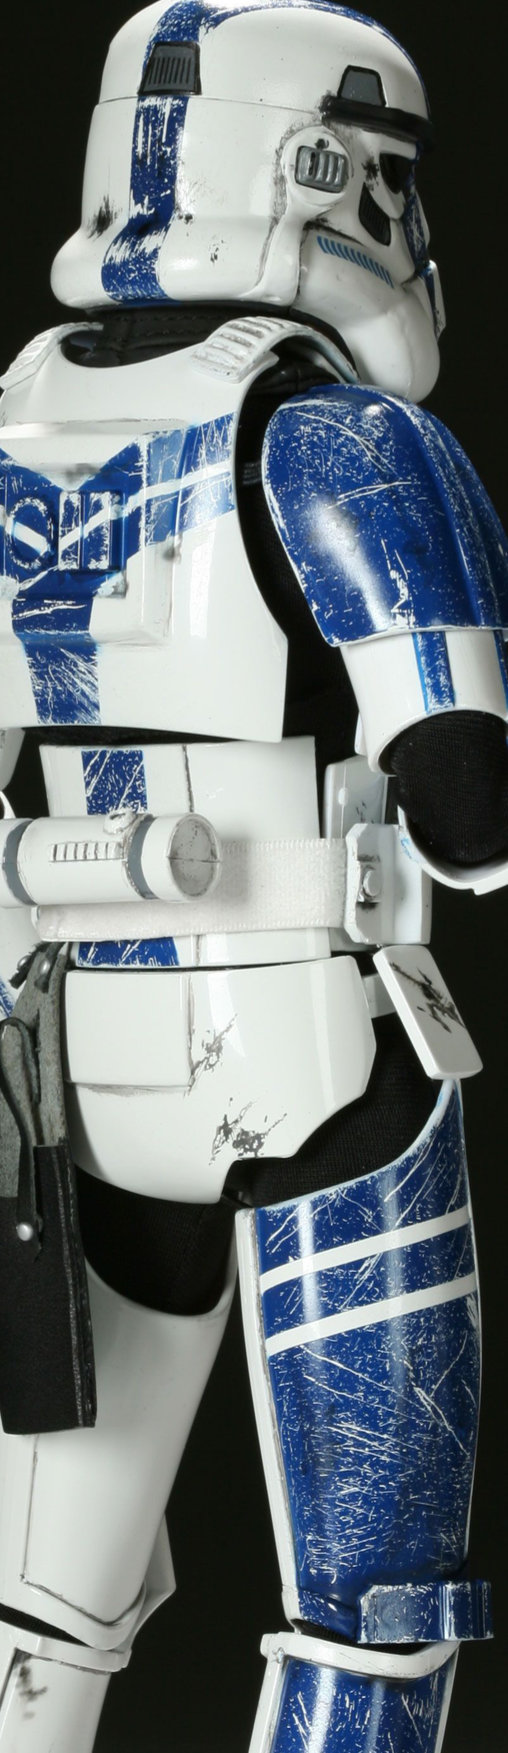 Star Wars - The Force Unleashed: Stormtrooper Commander, 1/6 Figur ... https://spaceart.de/produkte/sw034-stormtrooper-commander-figur-sideshow-2193-star-wars-the-force-unleashed-747720212091-spaceart.php